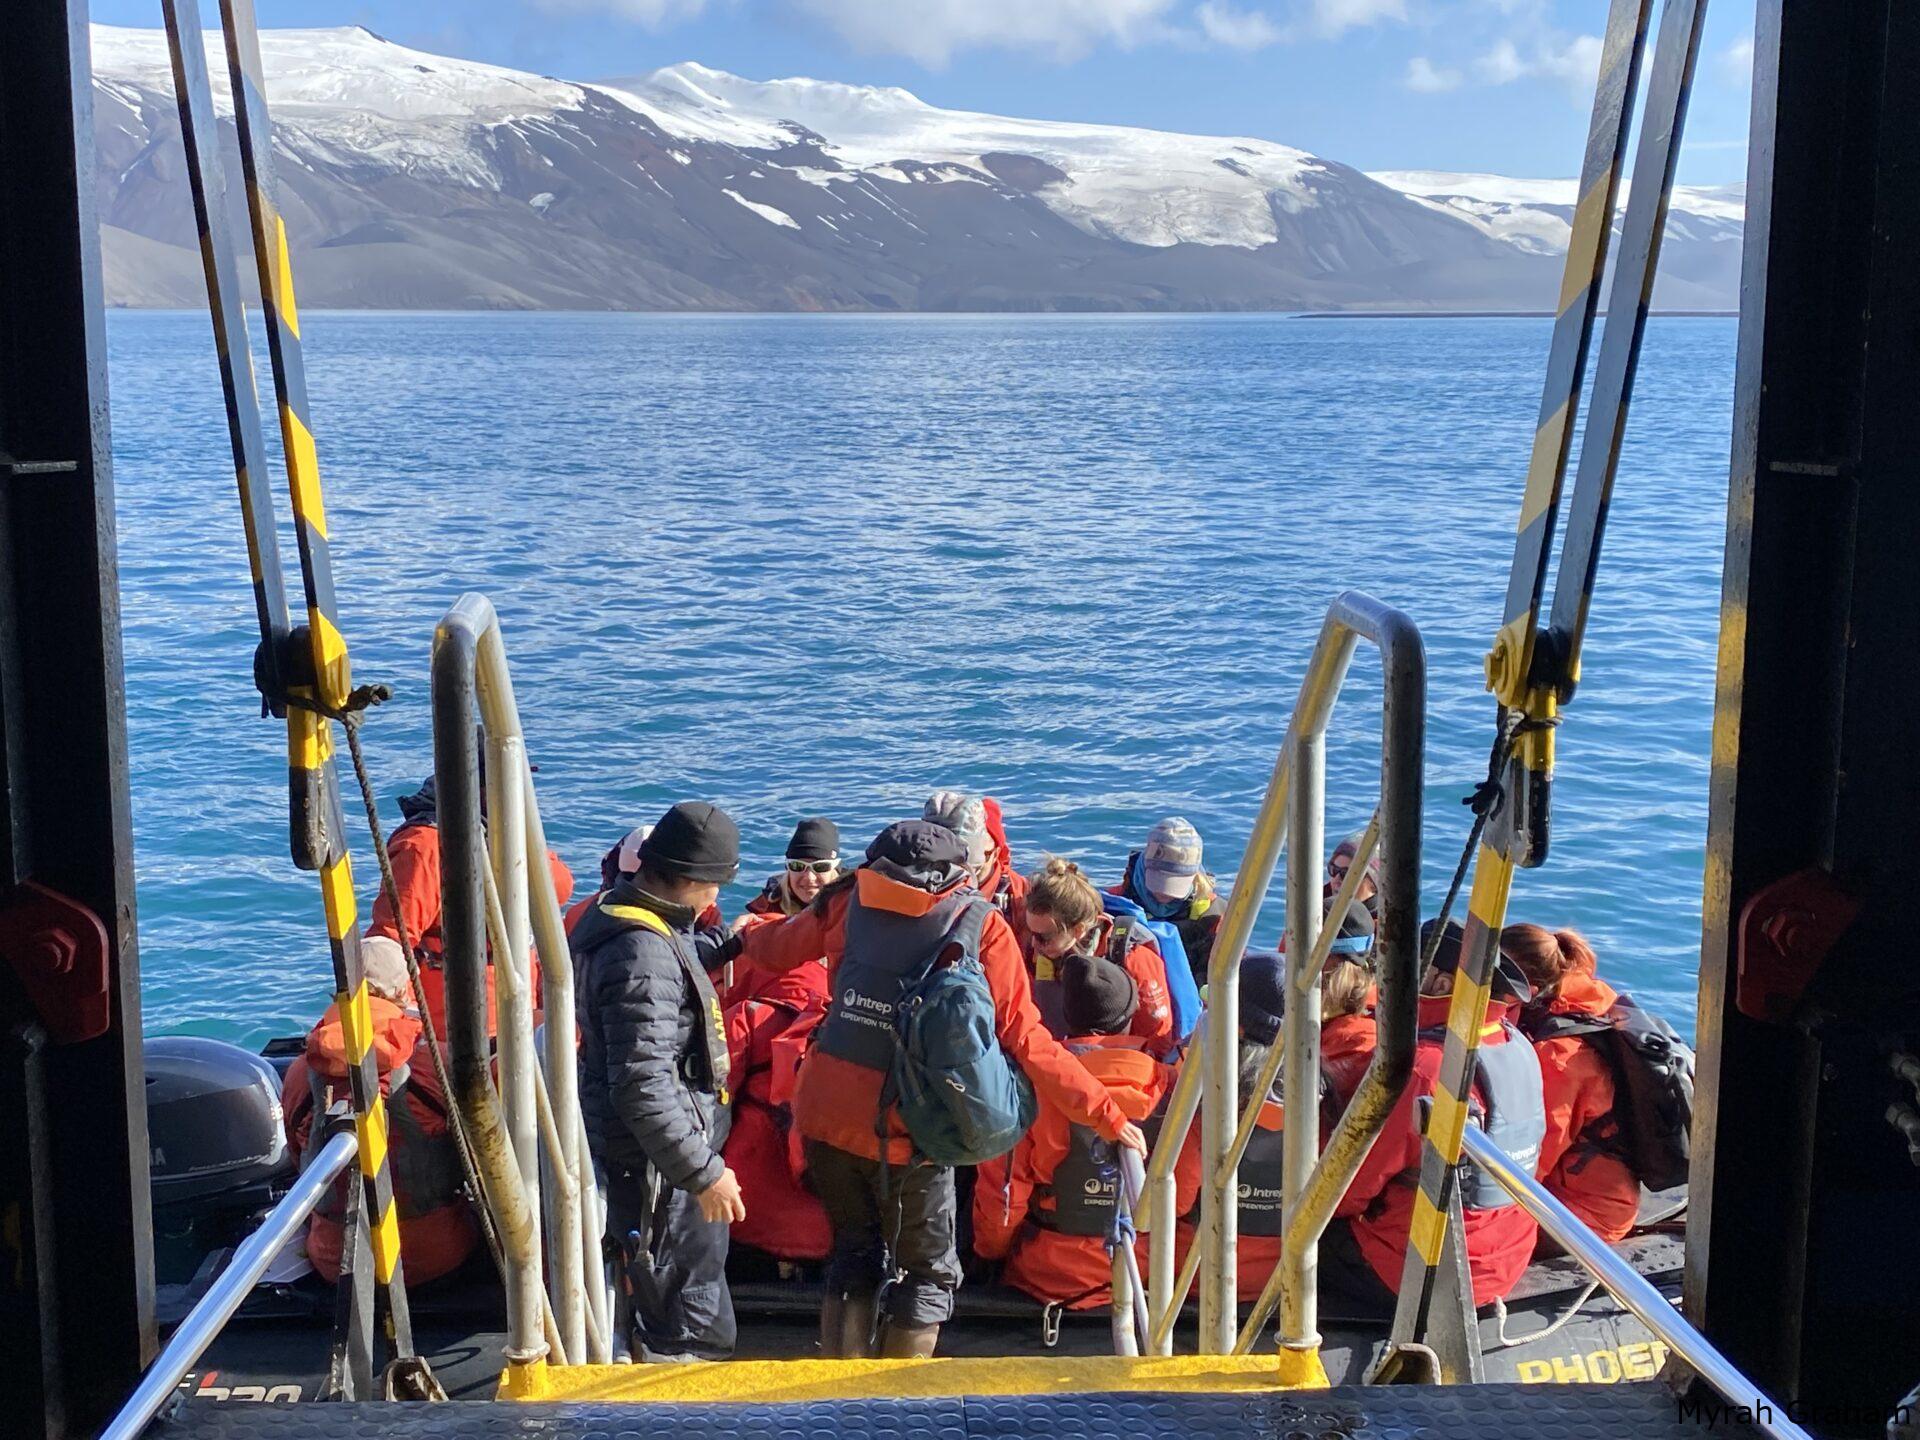 New methods of undertaking marine science in Antarctica using tourism vessels